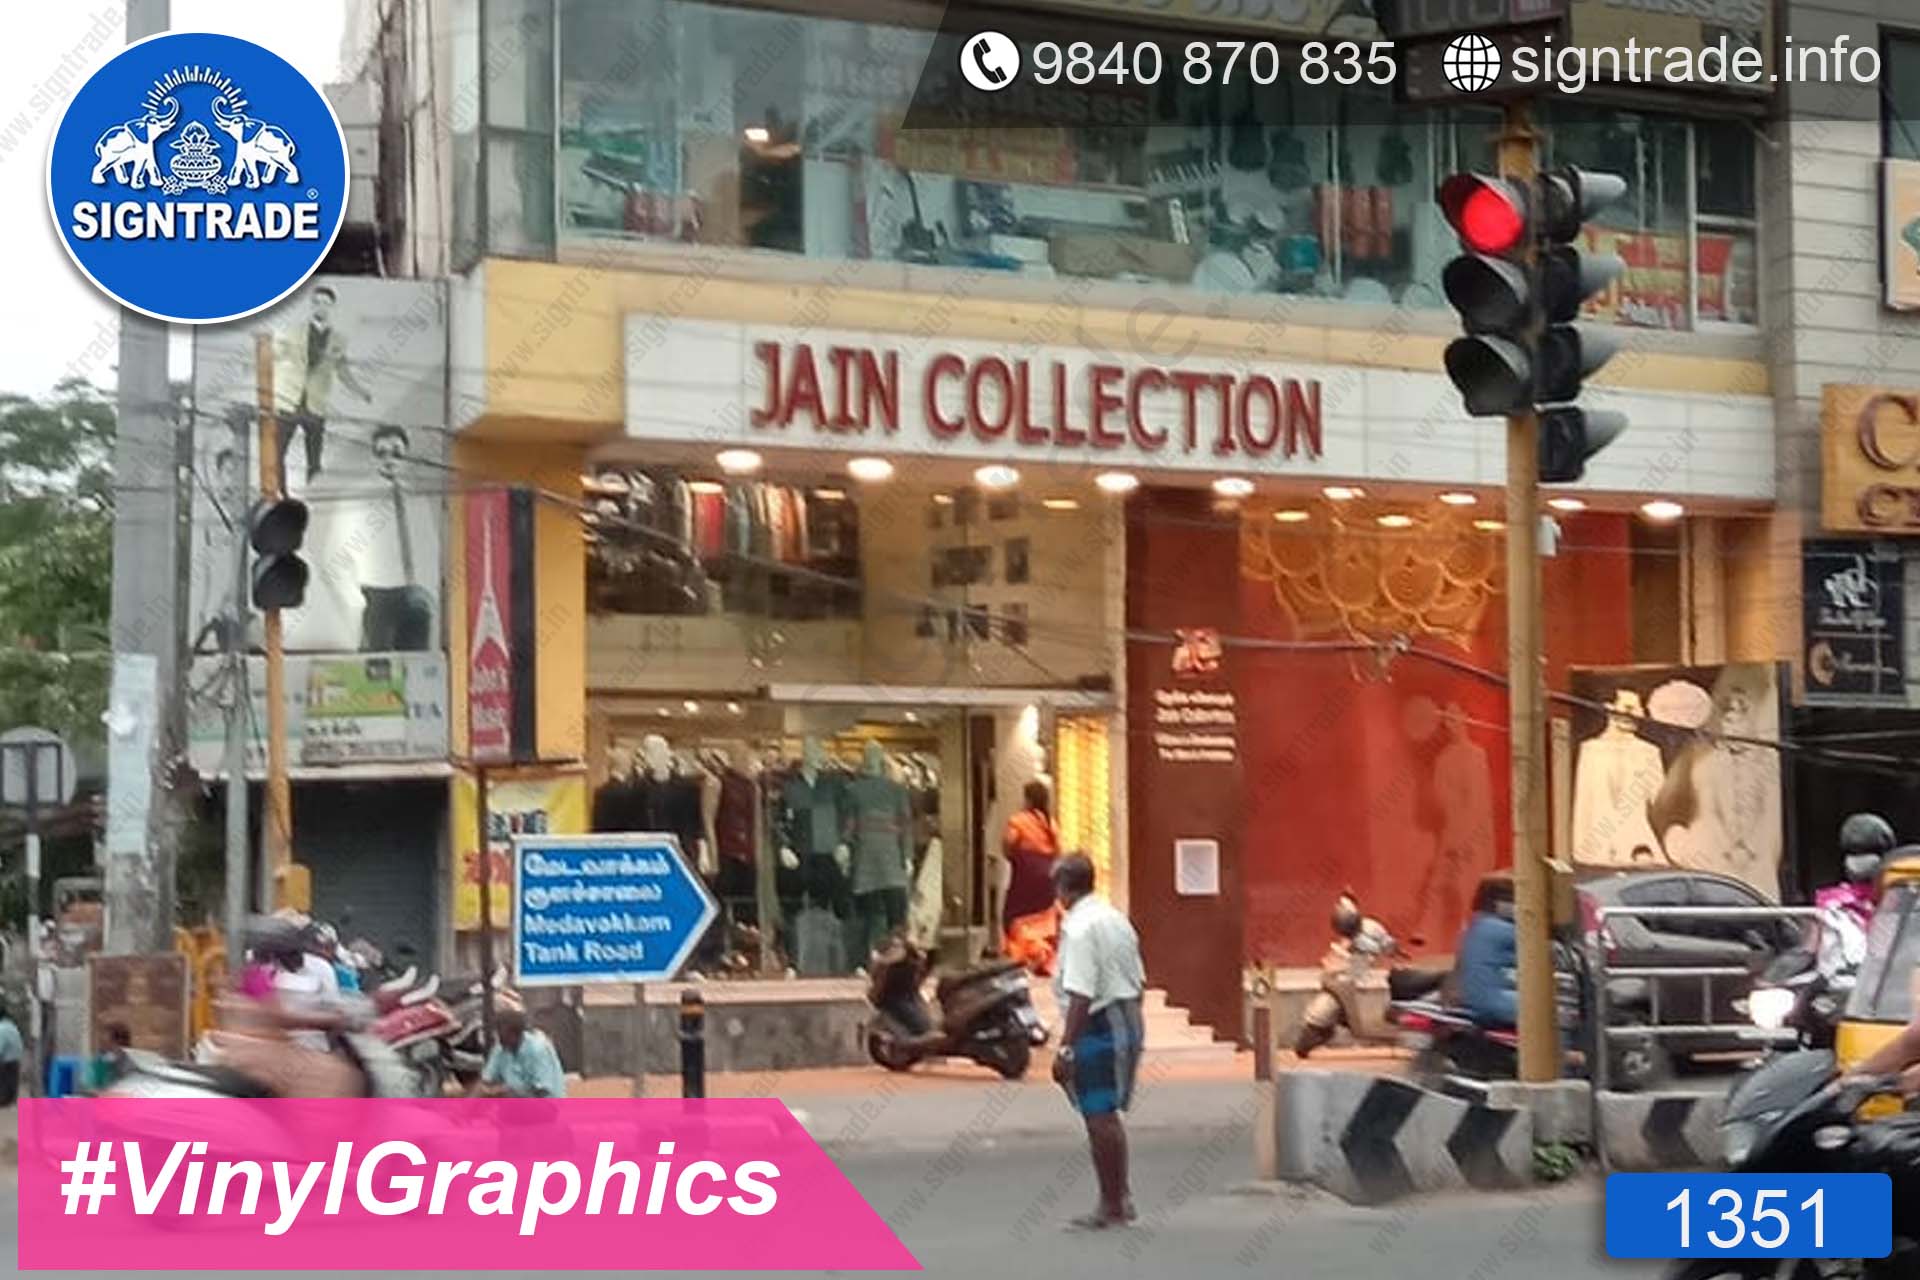 Jain collection - Vinyl Graphics on Wall